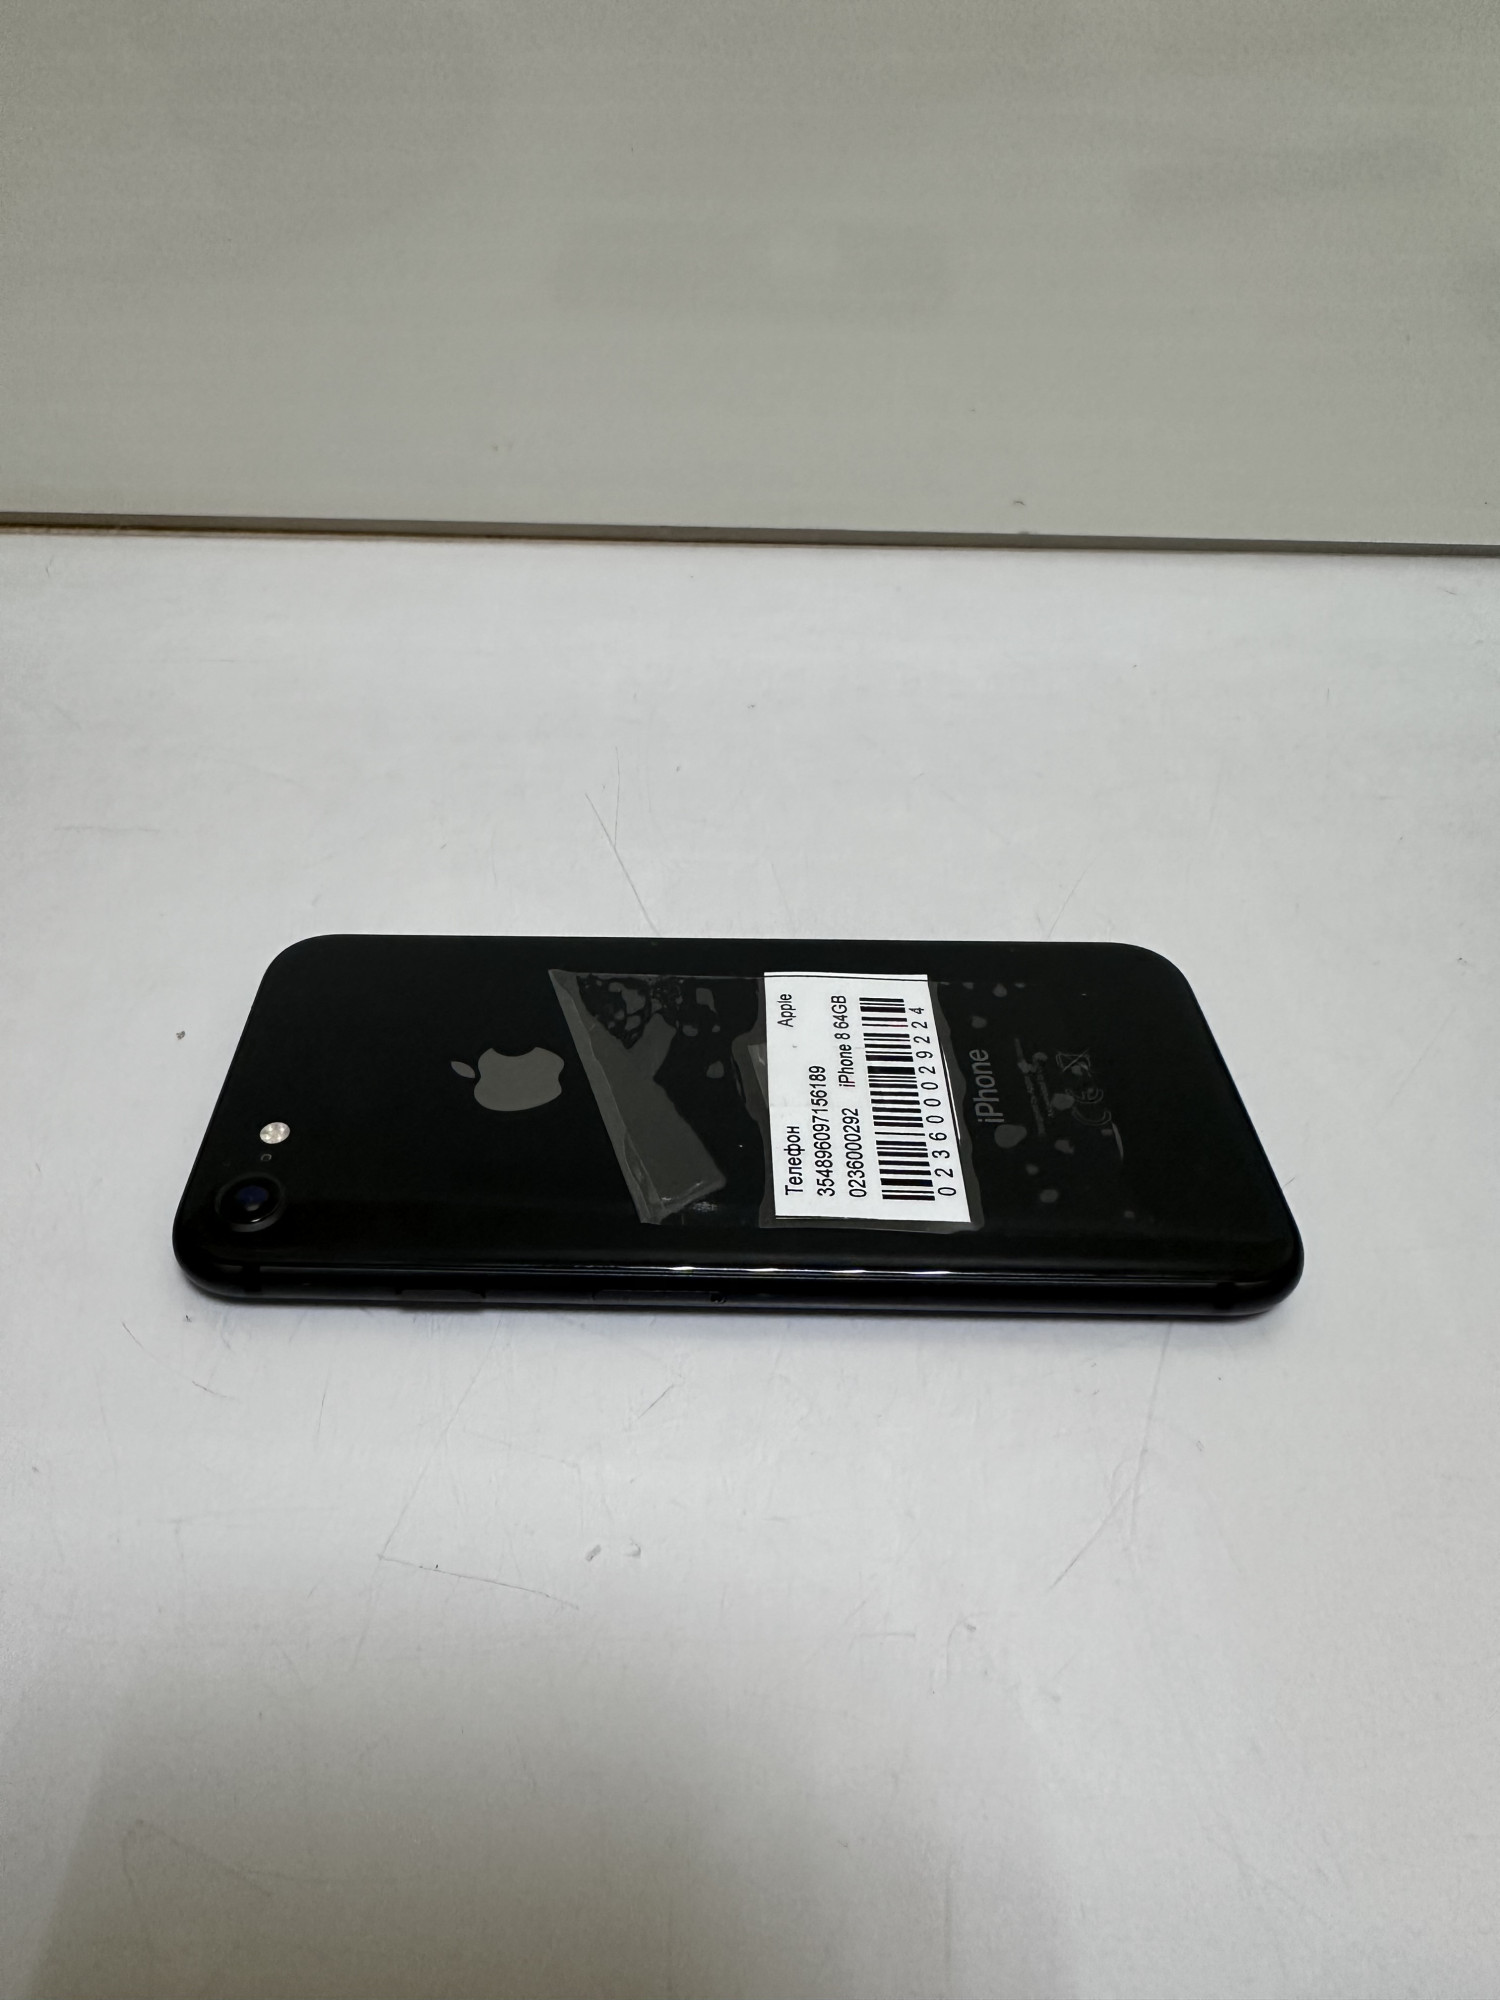 Apple iPhone 8 64Gb Space Gray 5